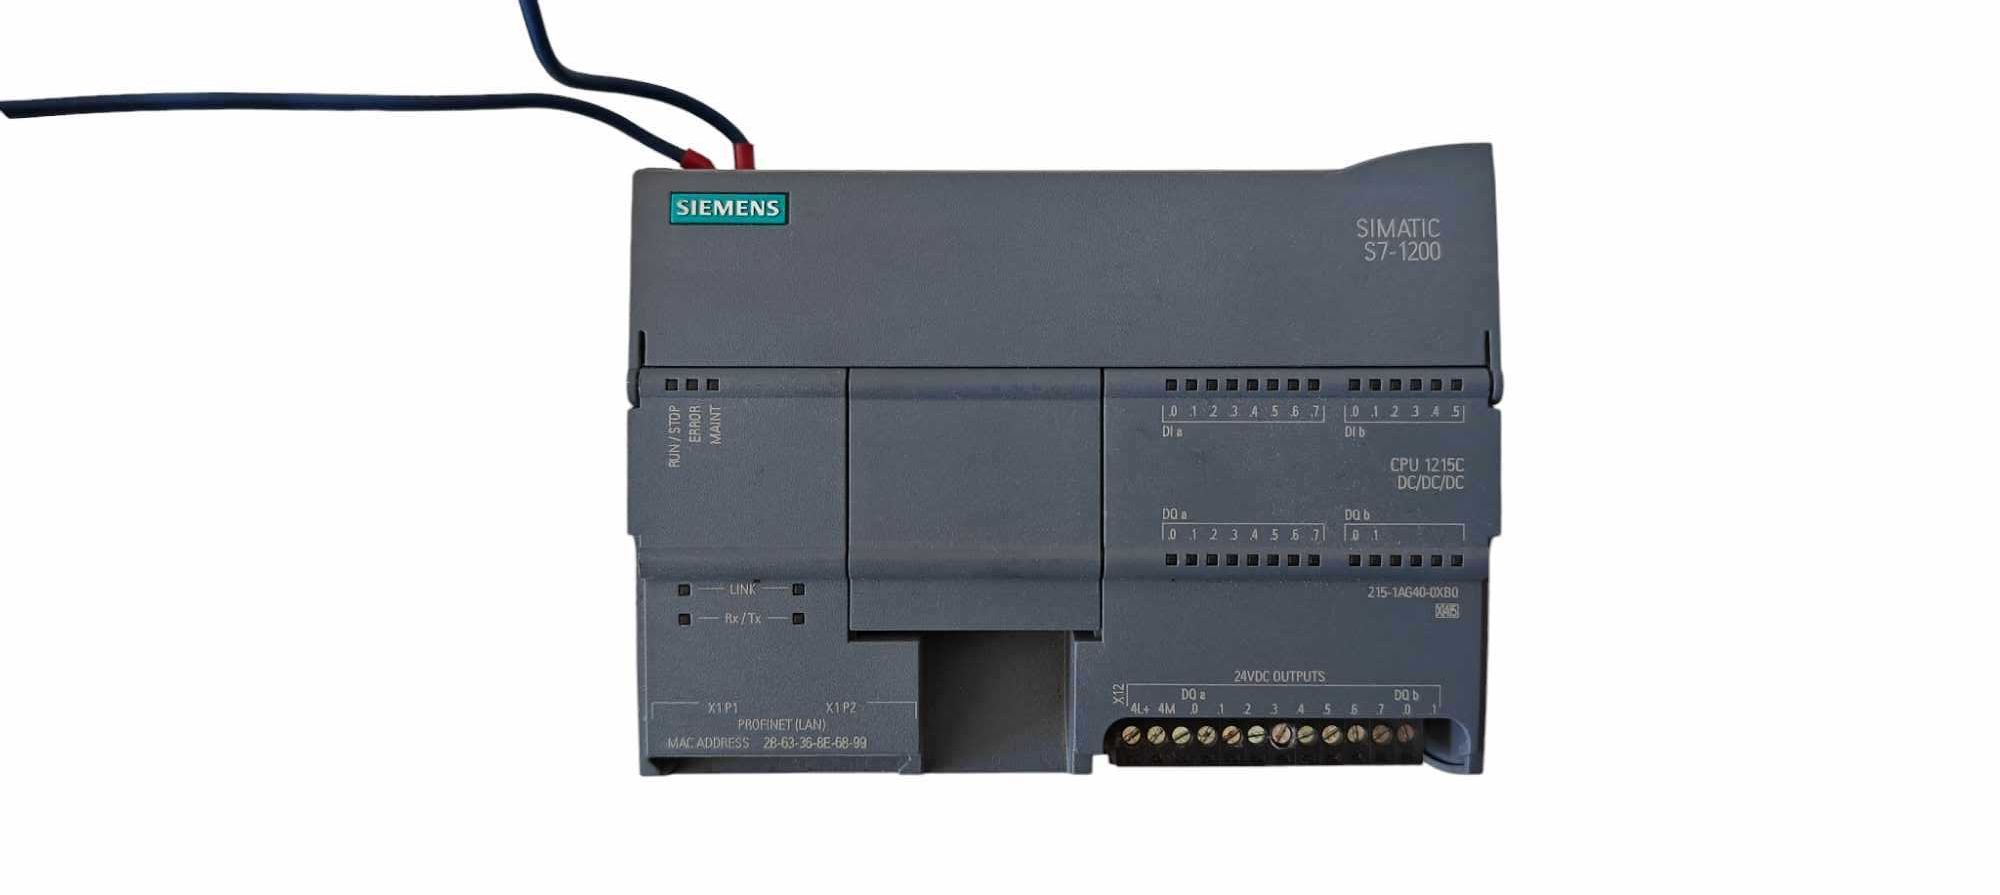 Siemens S7-1200 CPU 1215C DC/DC/DC